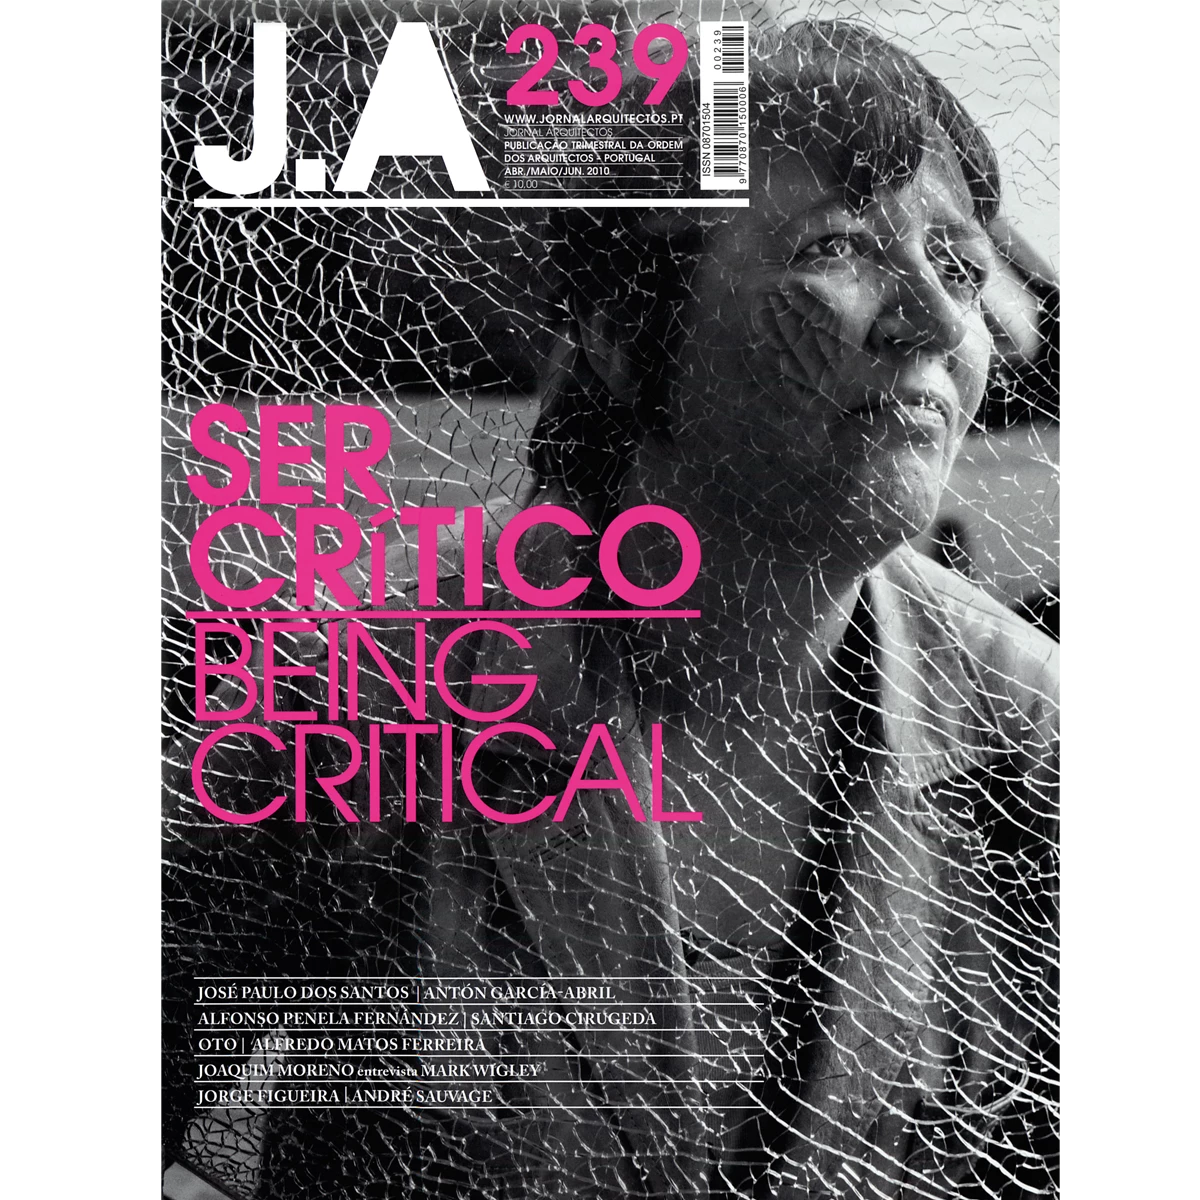 JA: Being Critical